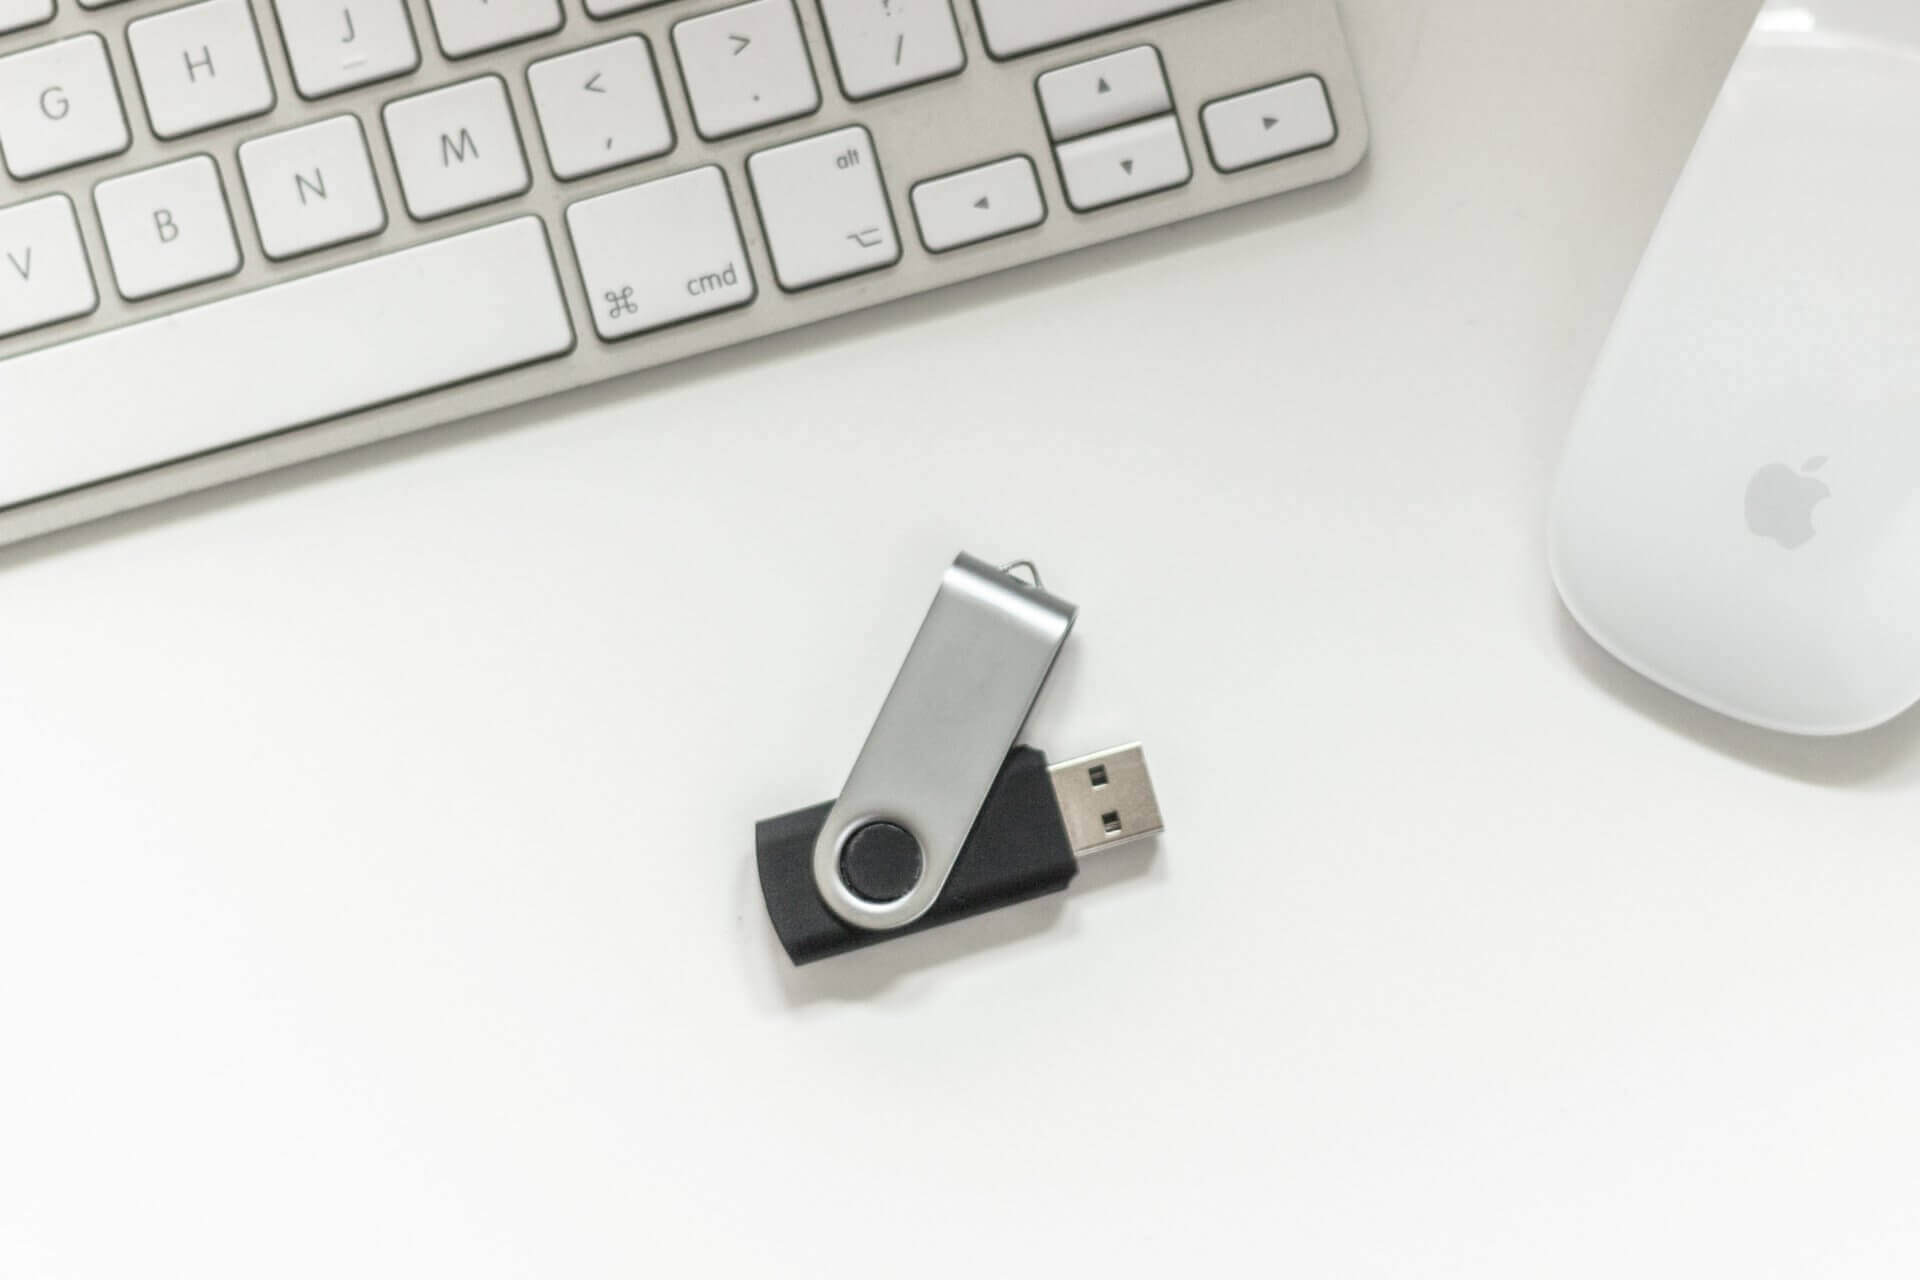 USB Stil til erhverv